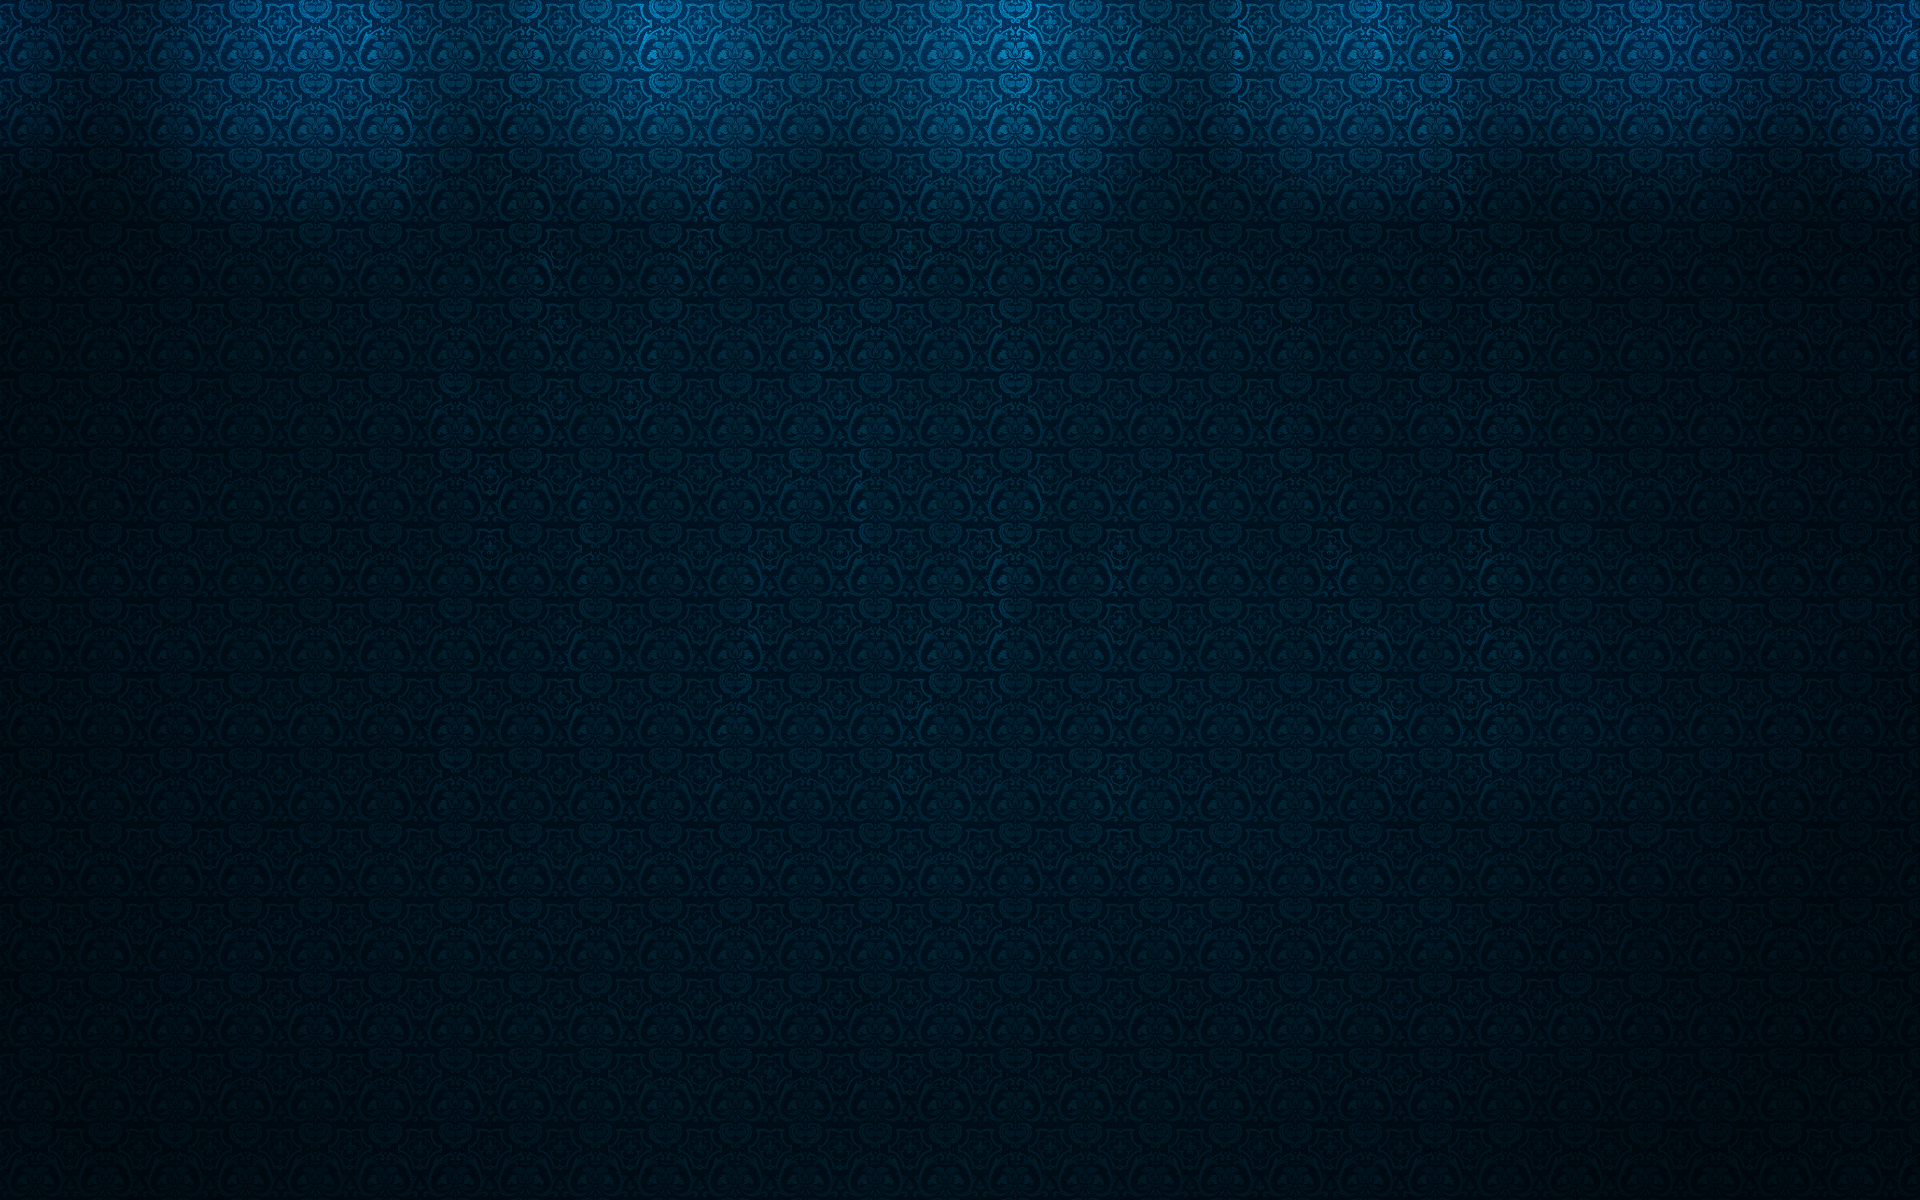 noir blue dark desktop wallpaper download noir blue dark wallpaper in